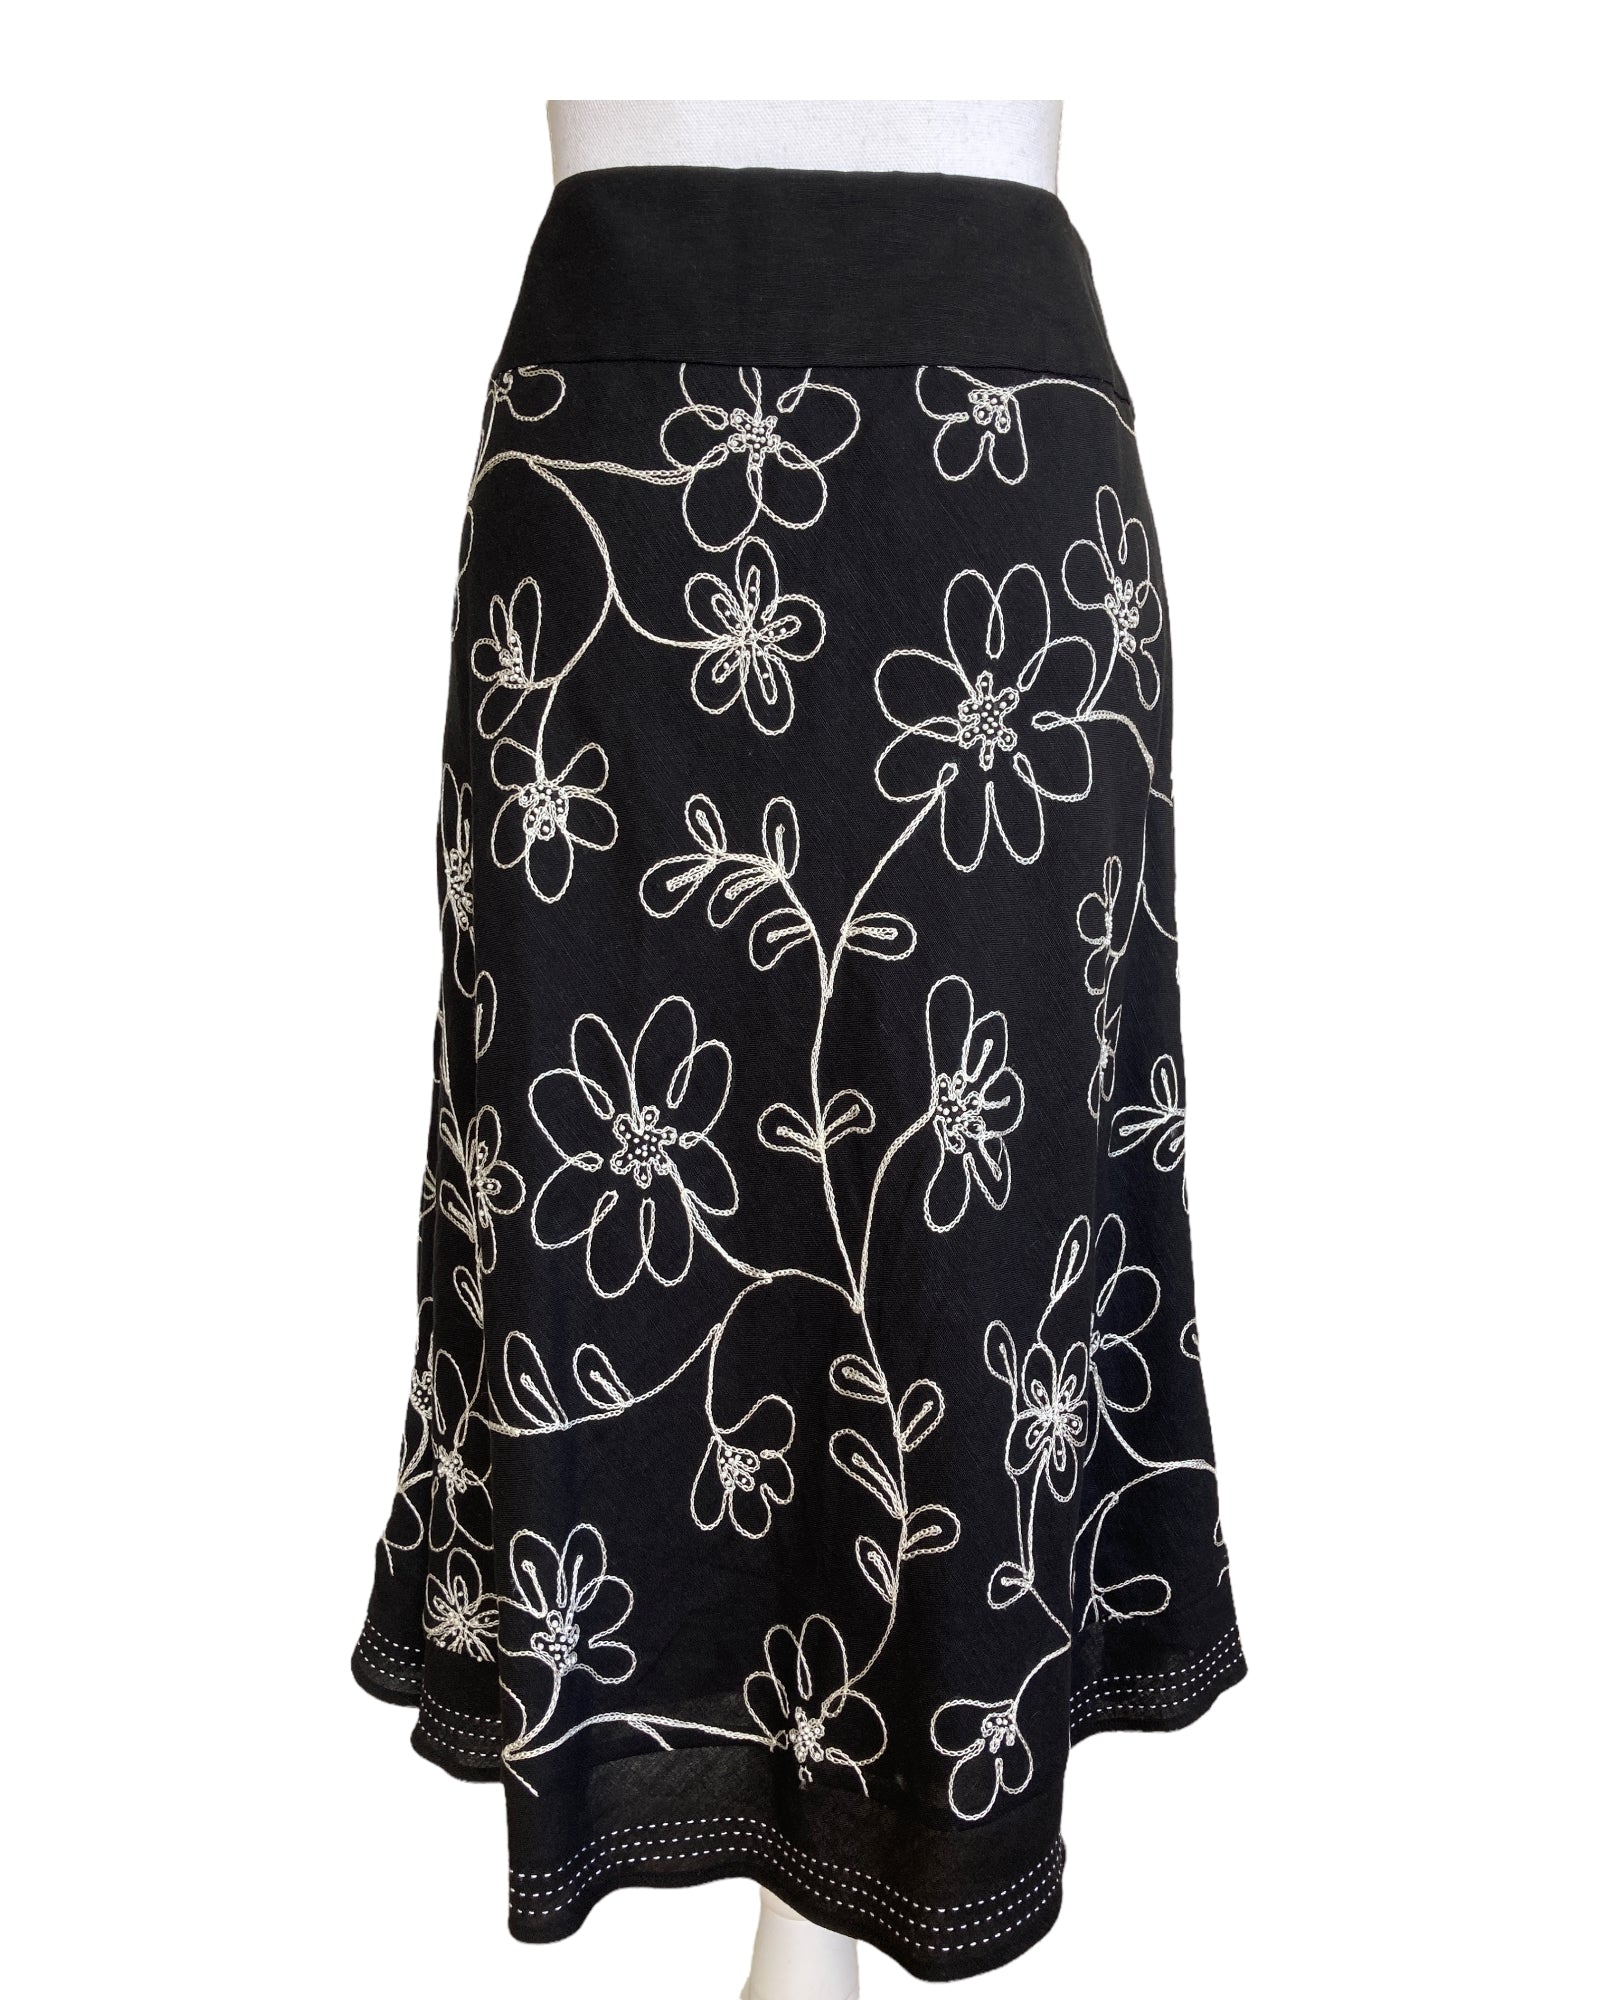 Tweeds Black and White Skirt, 4